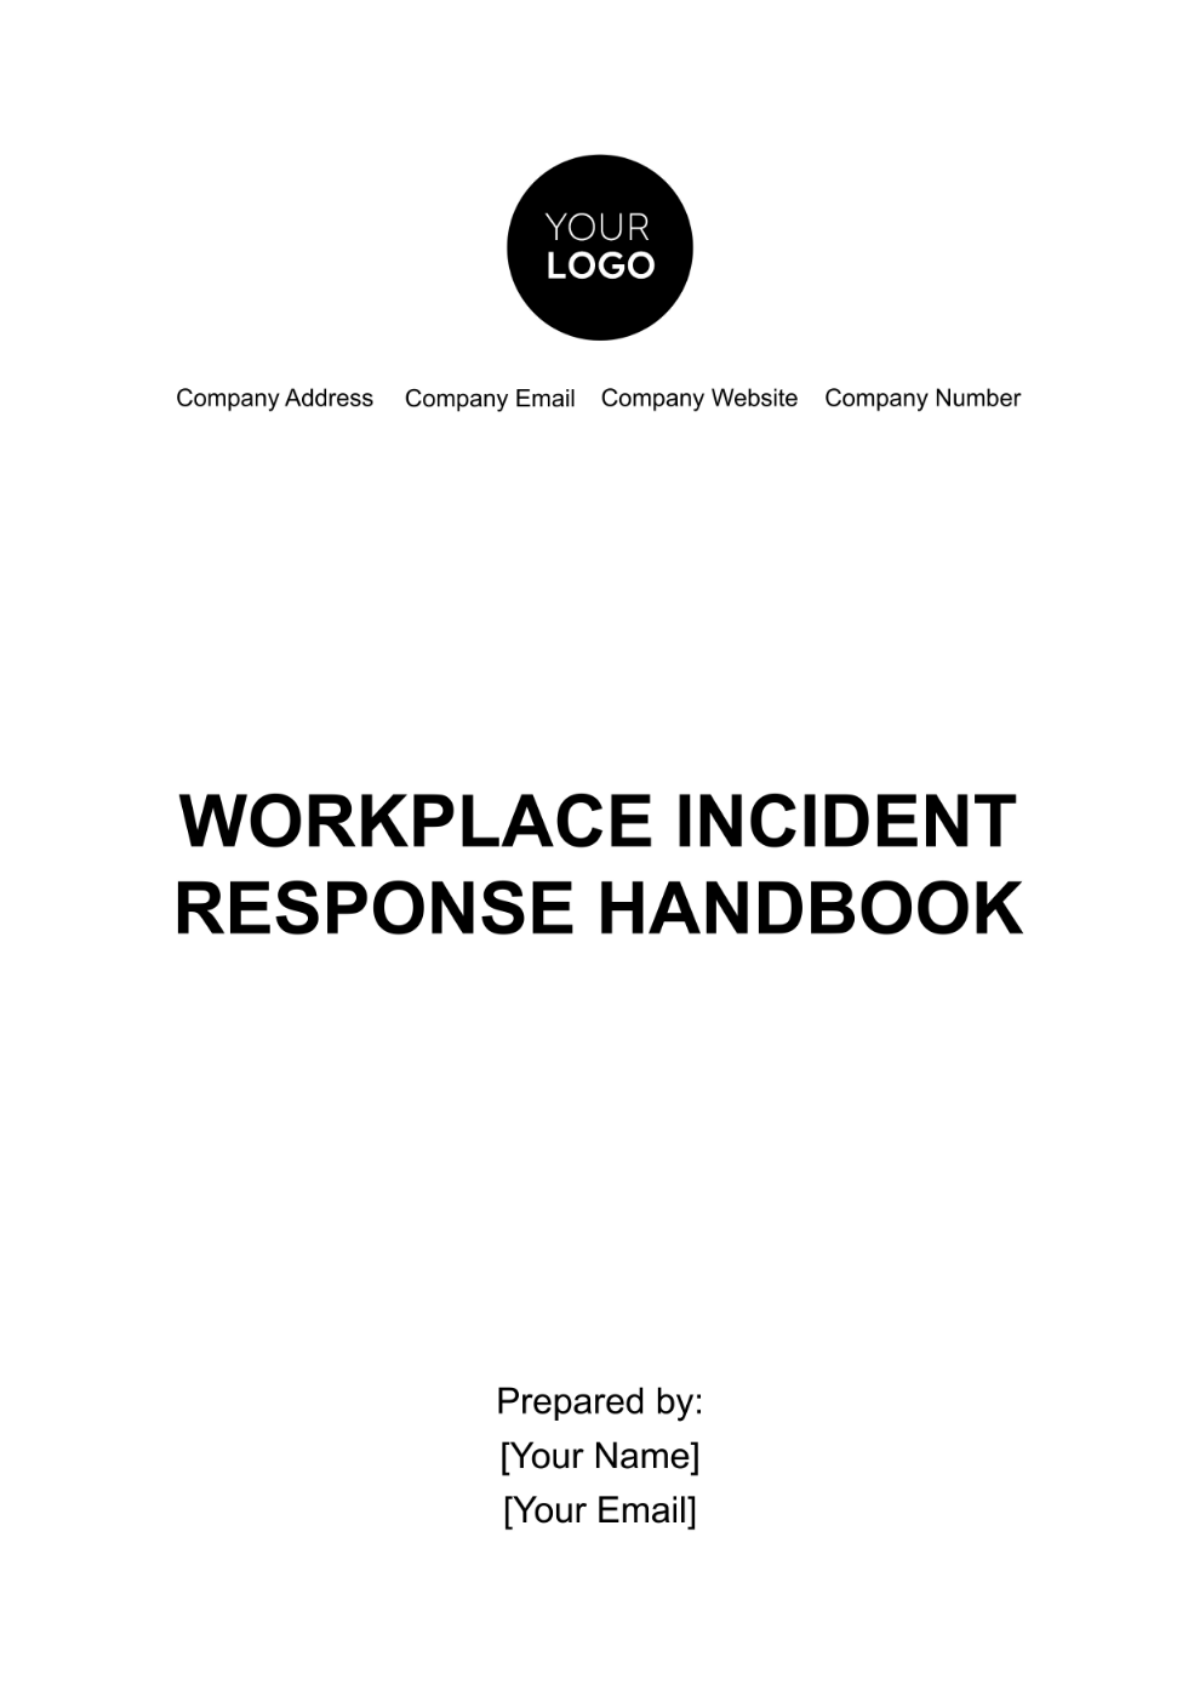 Workplace Incident Response Handbook Template